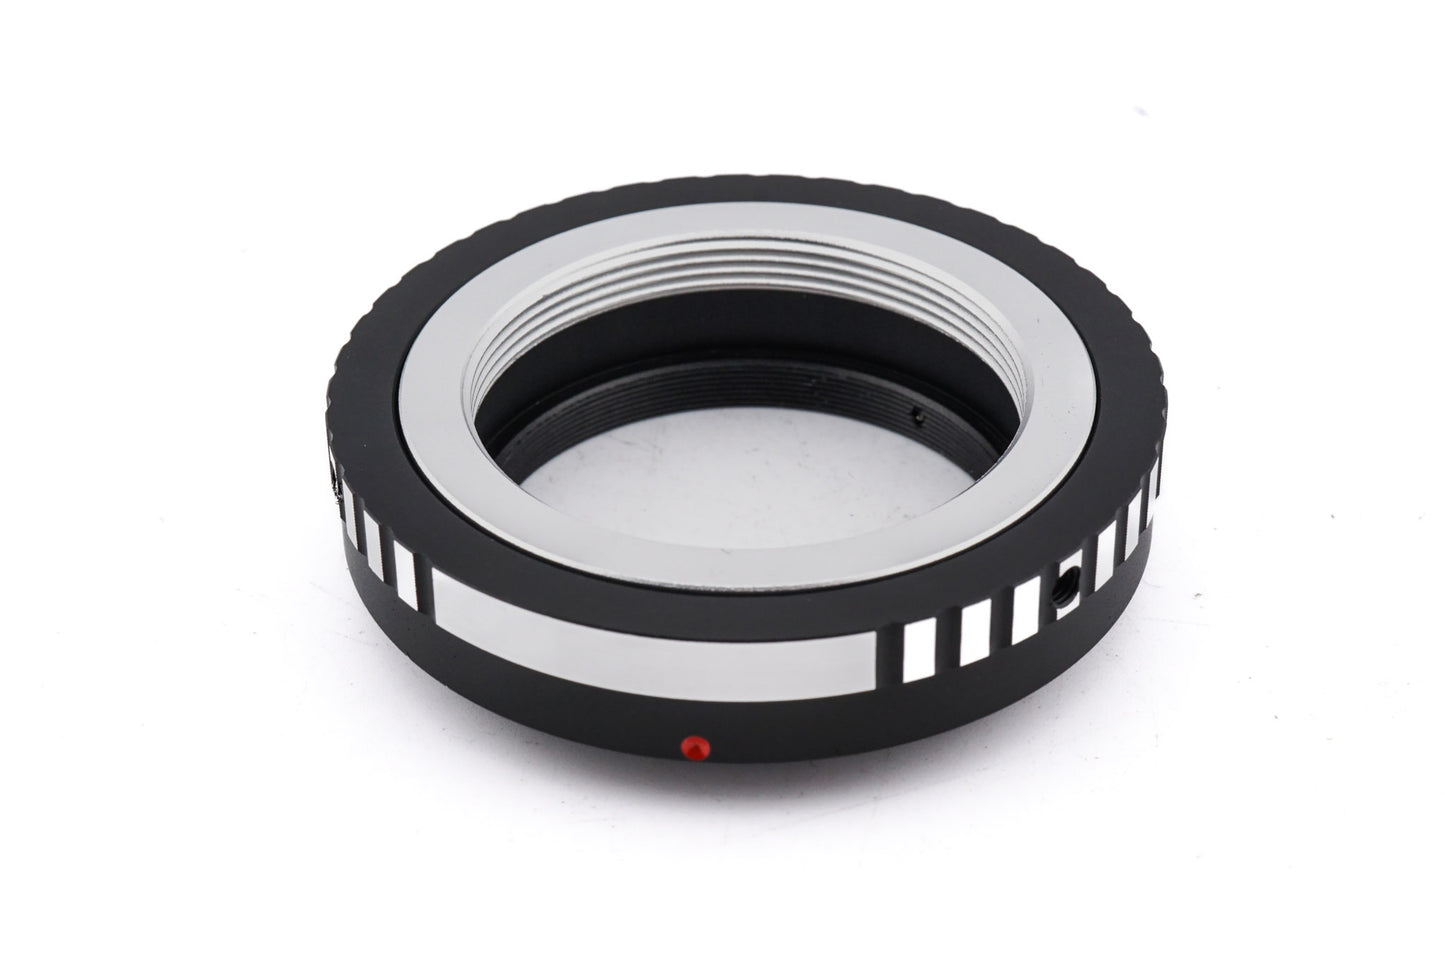 Generic M39 - Fuji X (L39-FX) Adapter - Lens Adapter